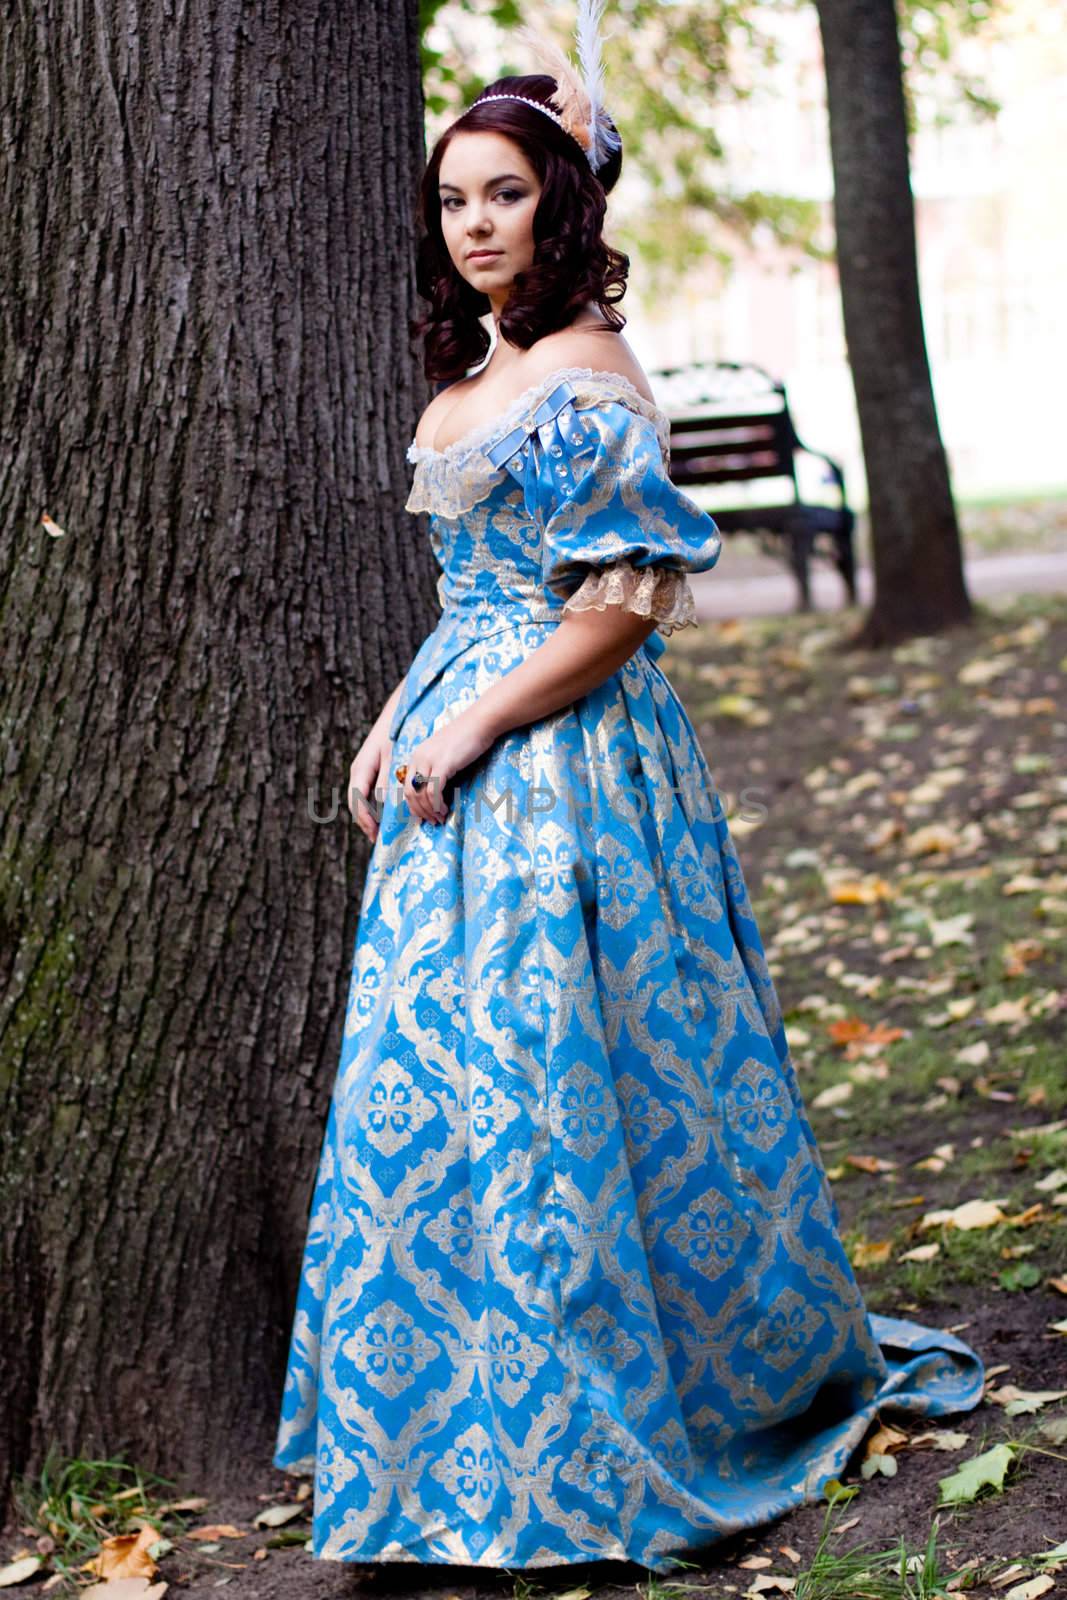 A portrait of lady in a blue baroque dress standing near a bole
